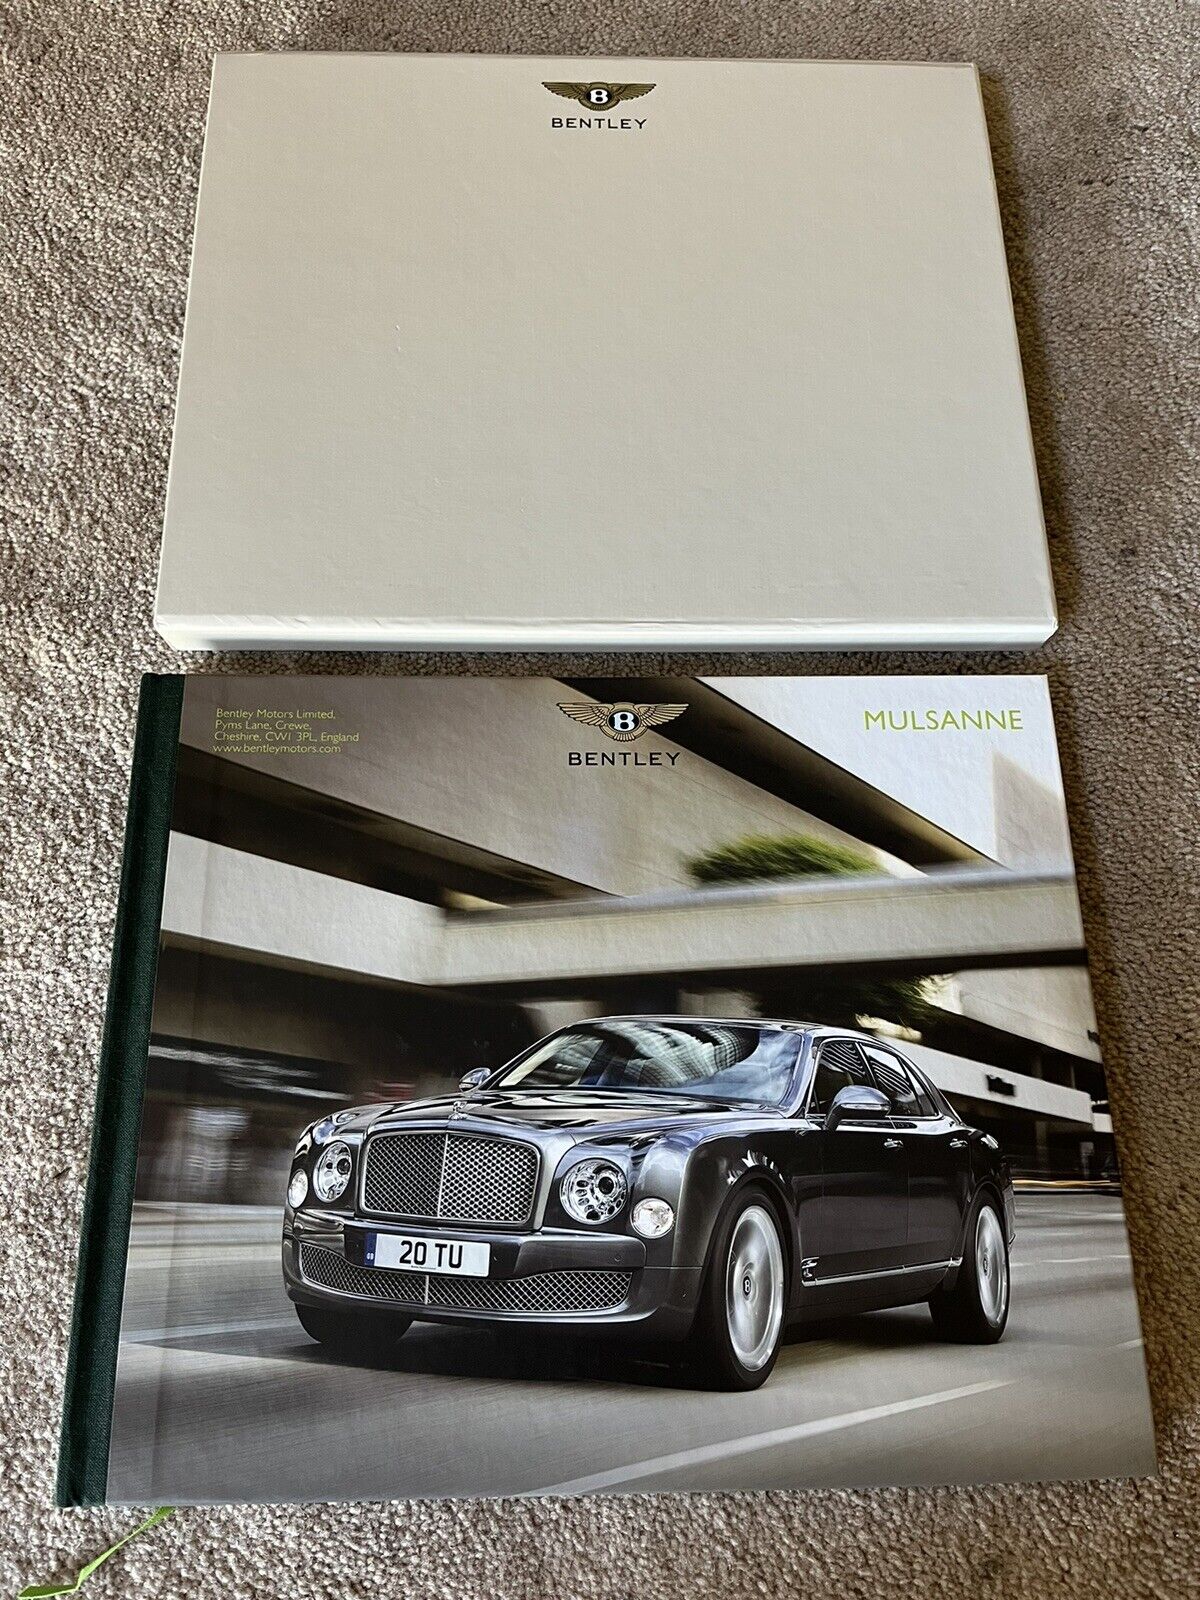 Bentley The Mulsanne Range 2012 Hardcover Book In Original Case